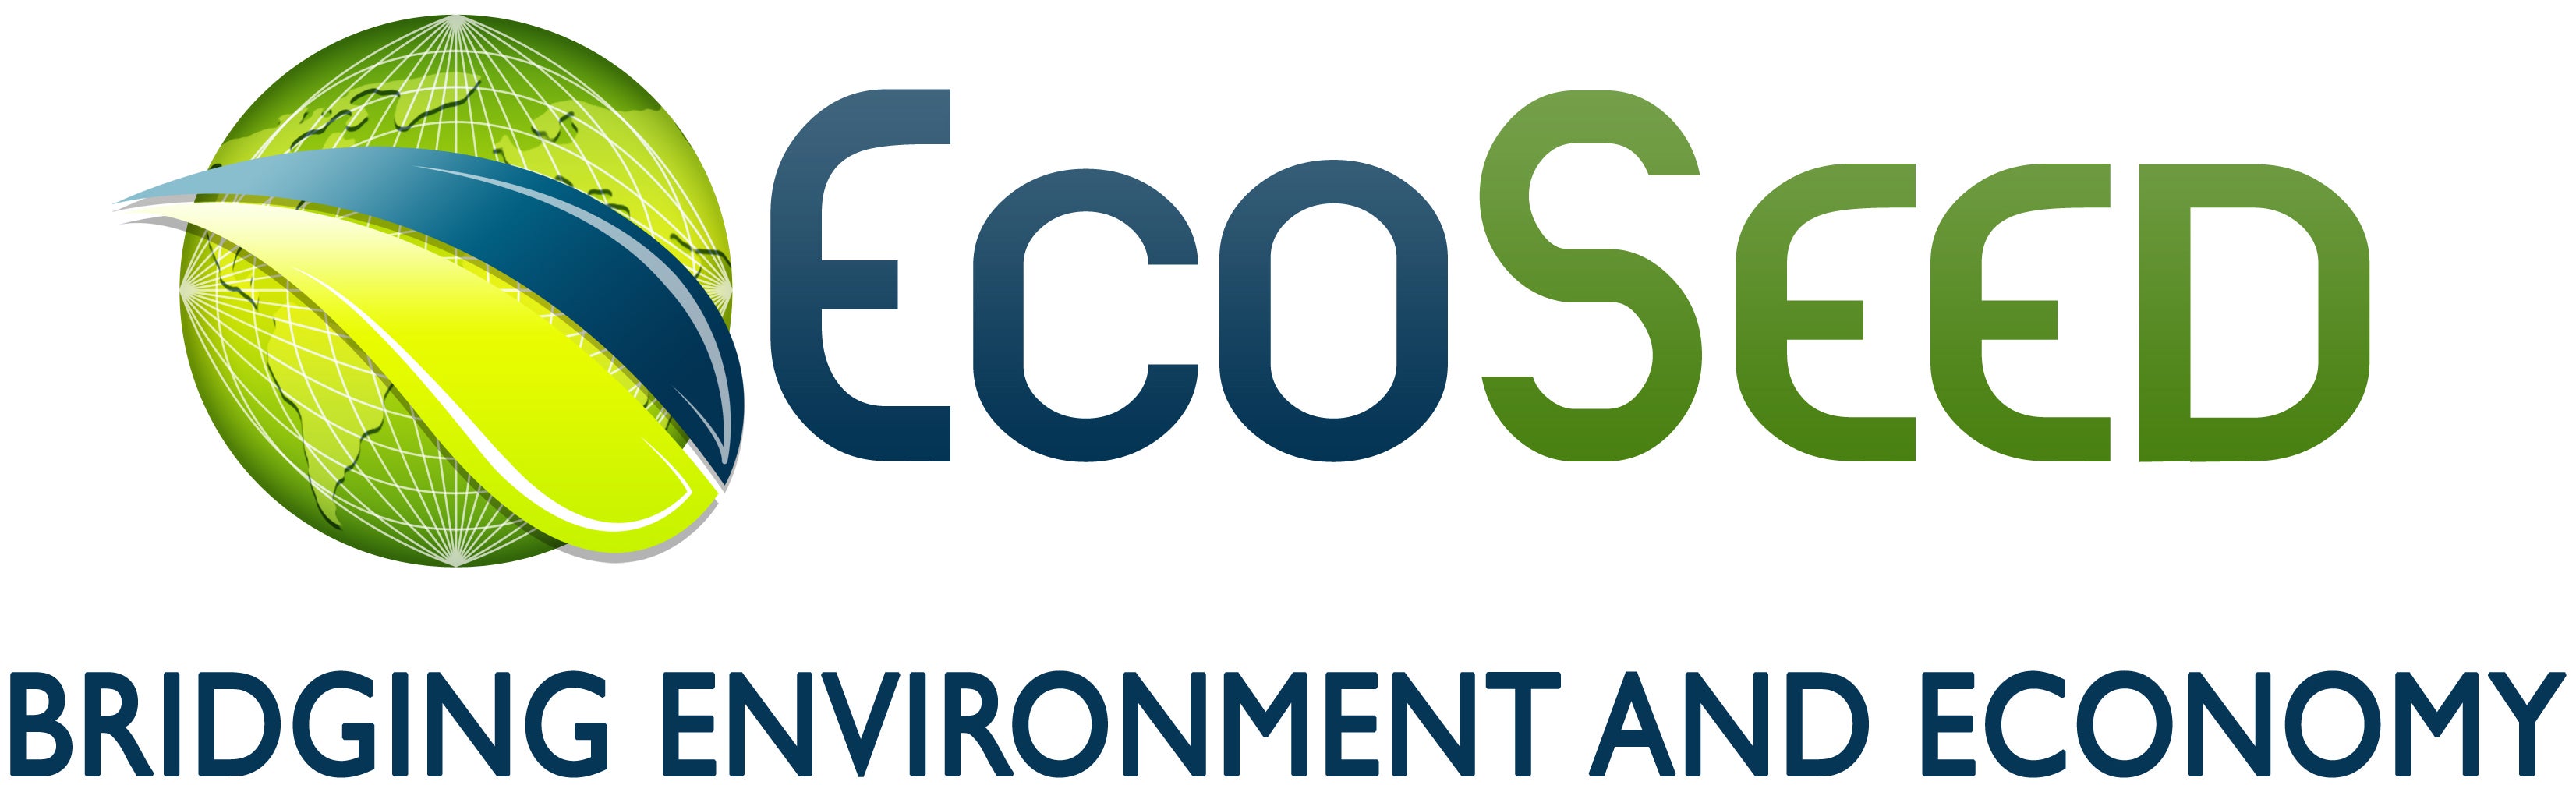 ecoseed logo_high res1.jpg